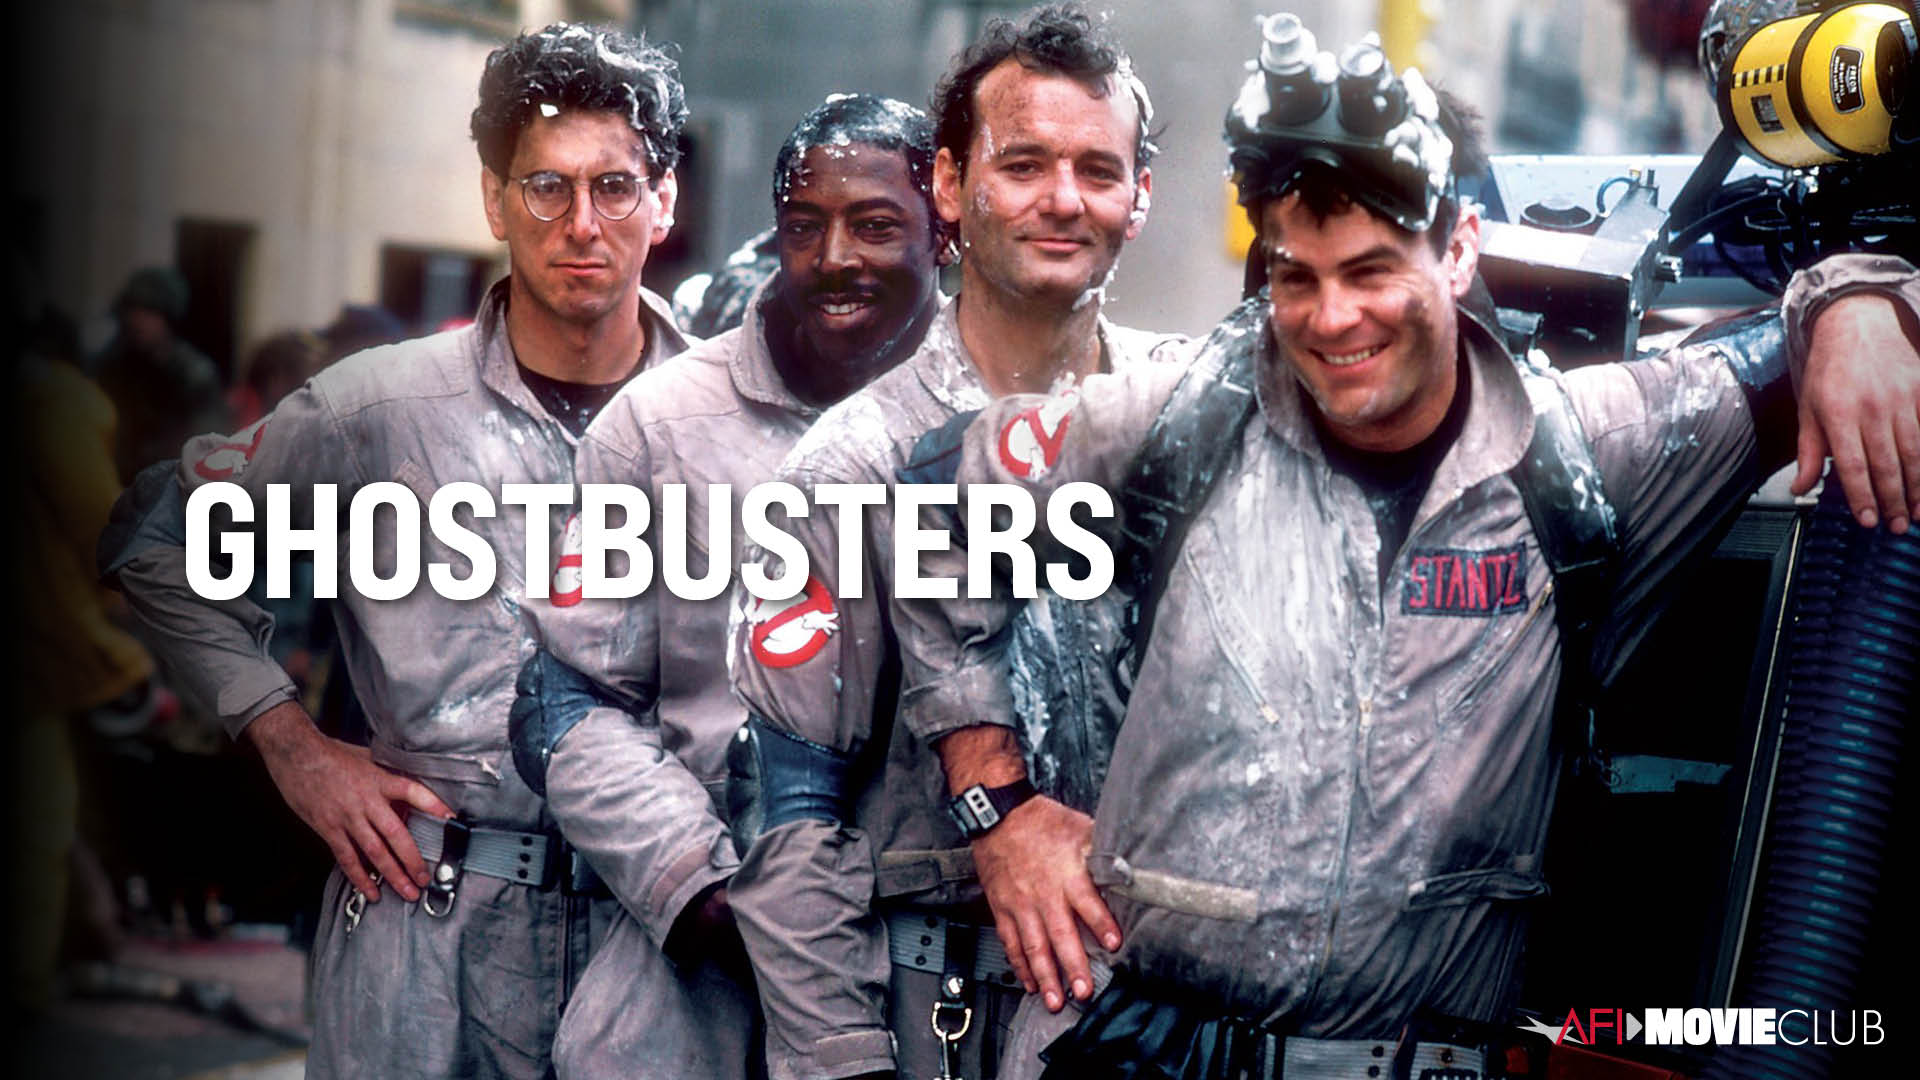 Ghostbusters Film Still - Dan Aykroyd, Bill Murray, Harold Ramis, and Ernie Hudson